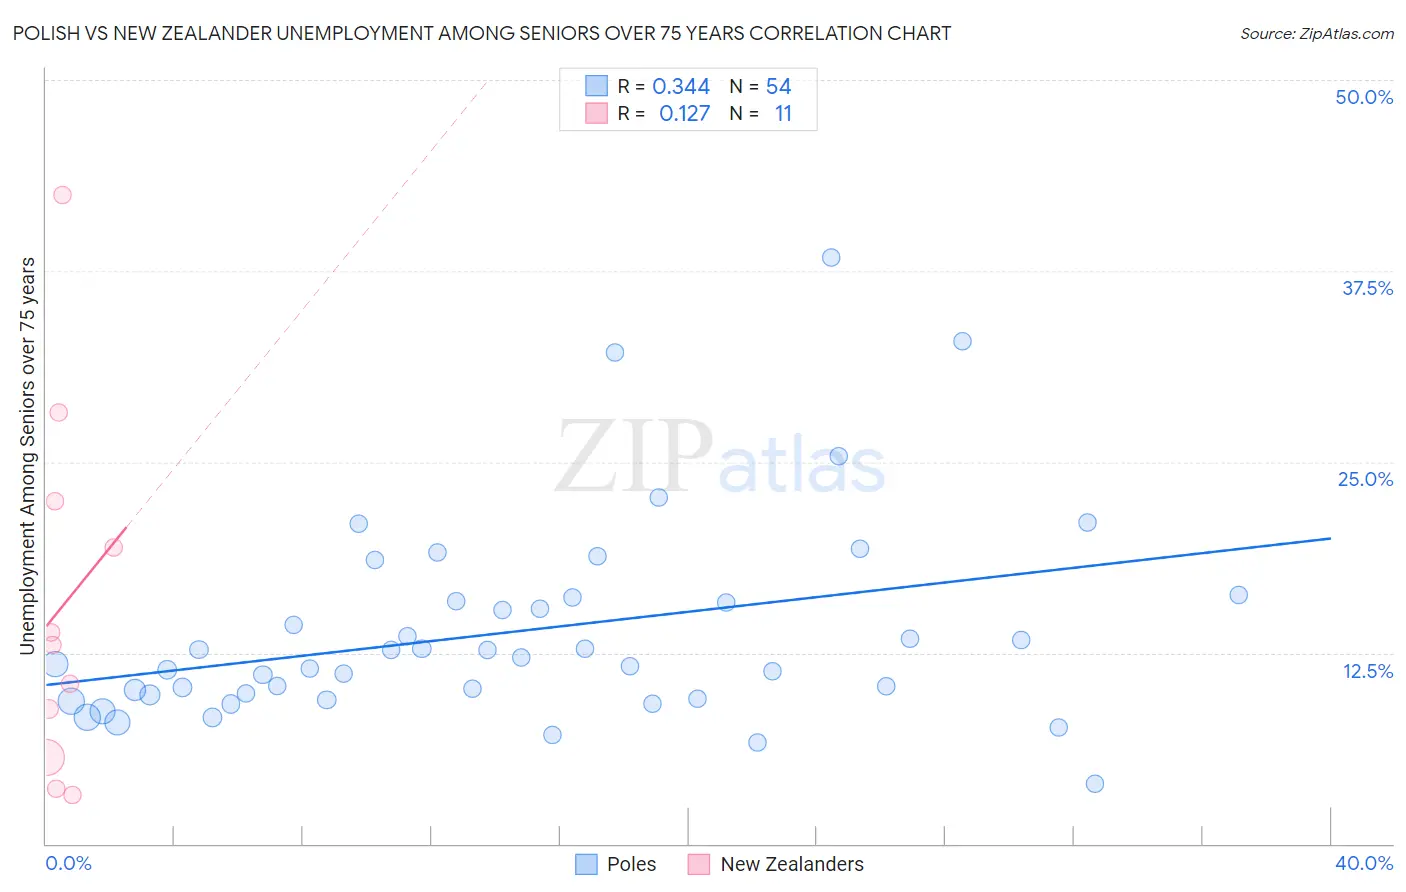 Polish vs New Zealander Unemployment Among Seniors over 75 years